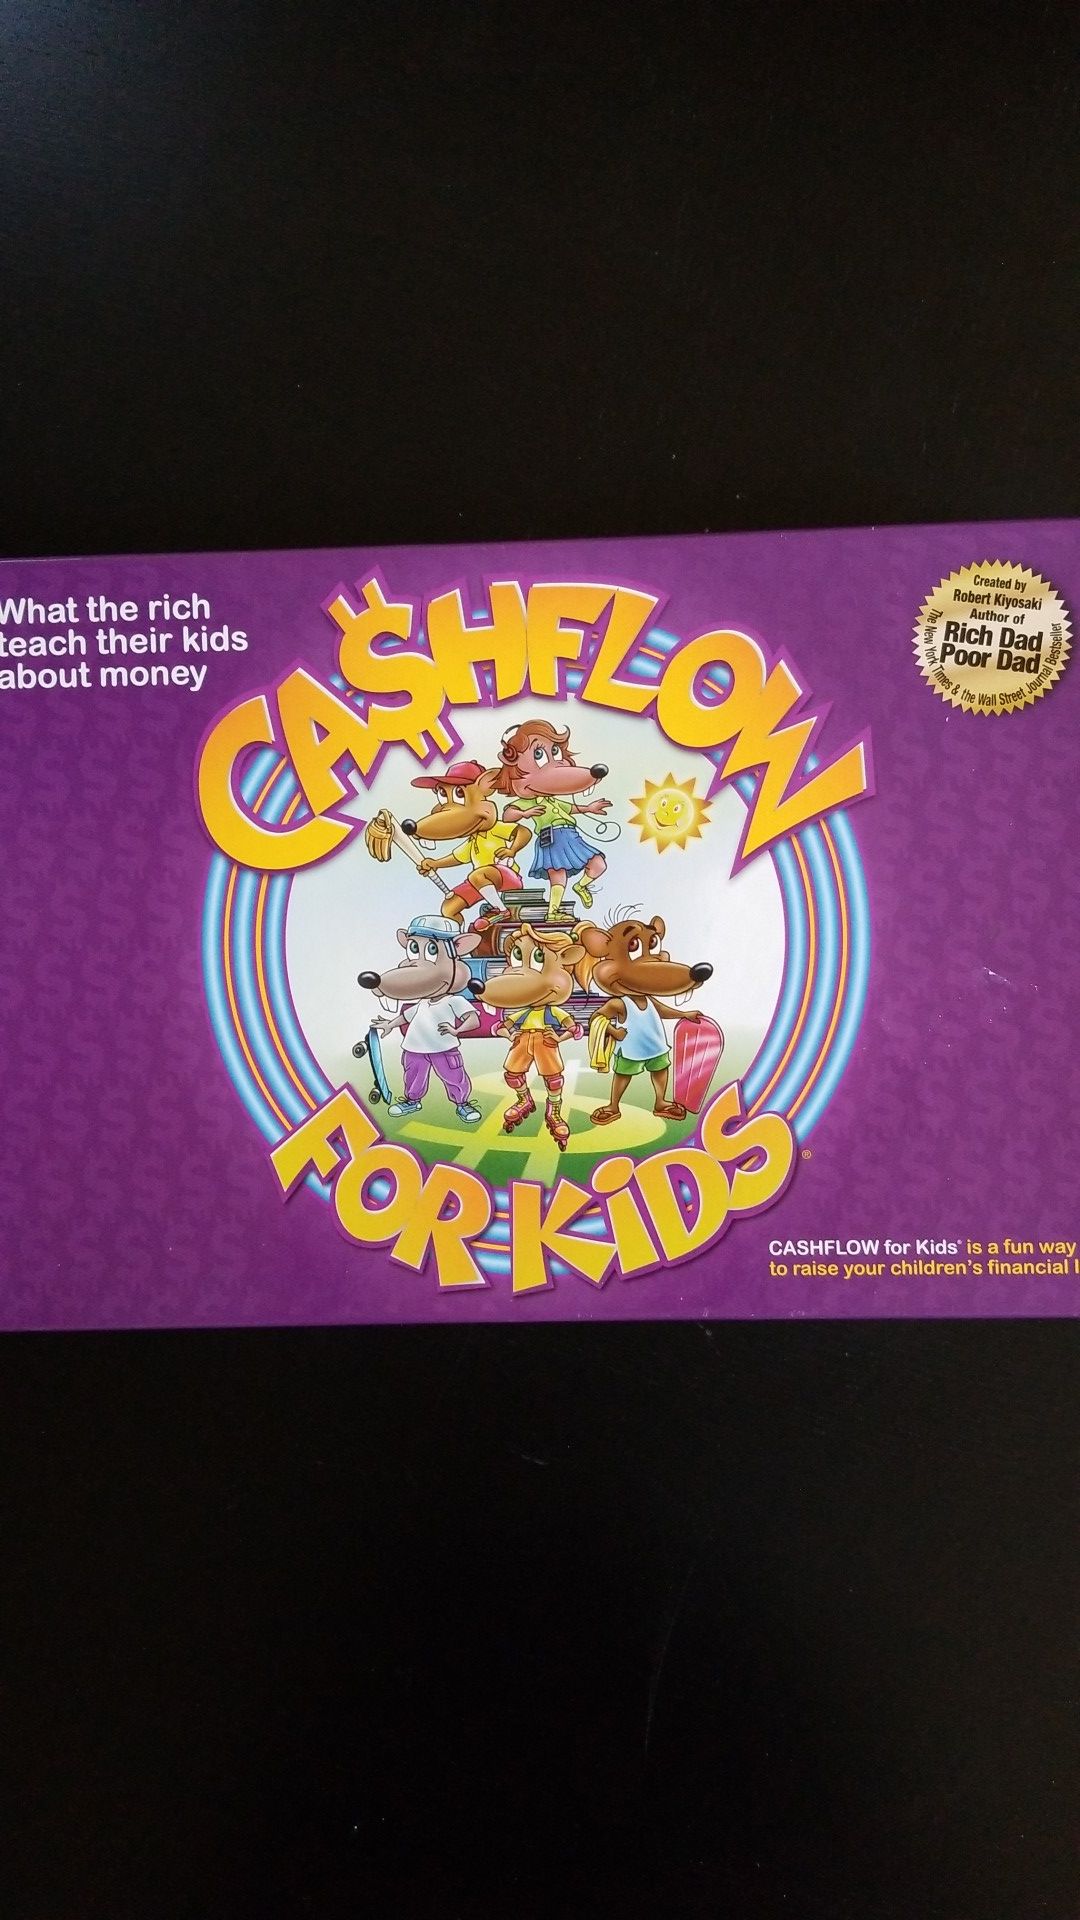 Cashflow for kids board game